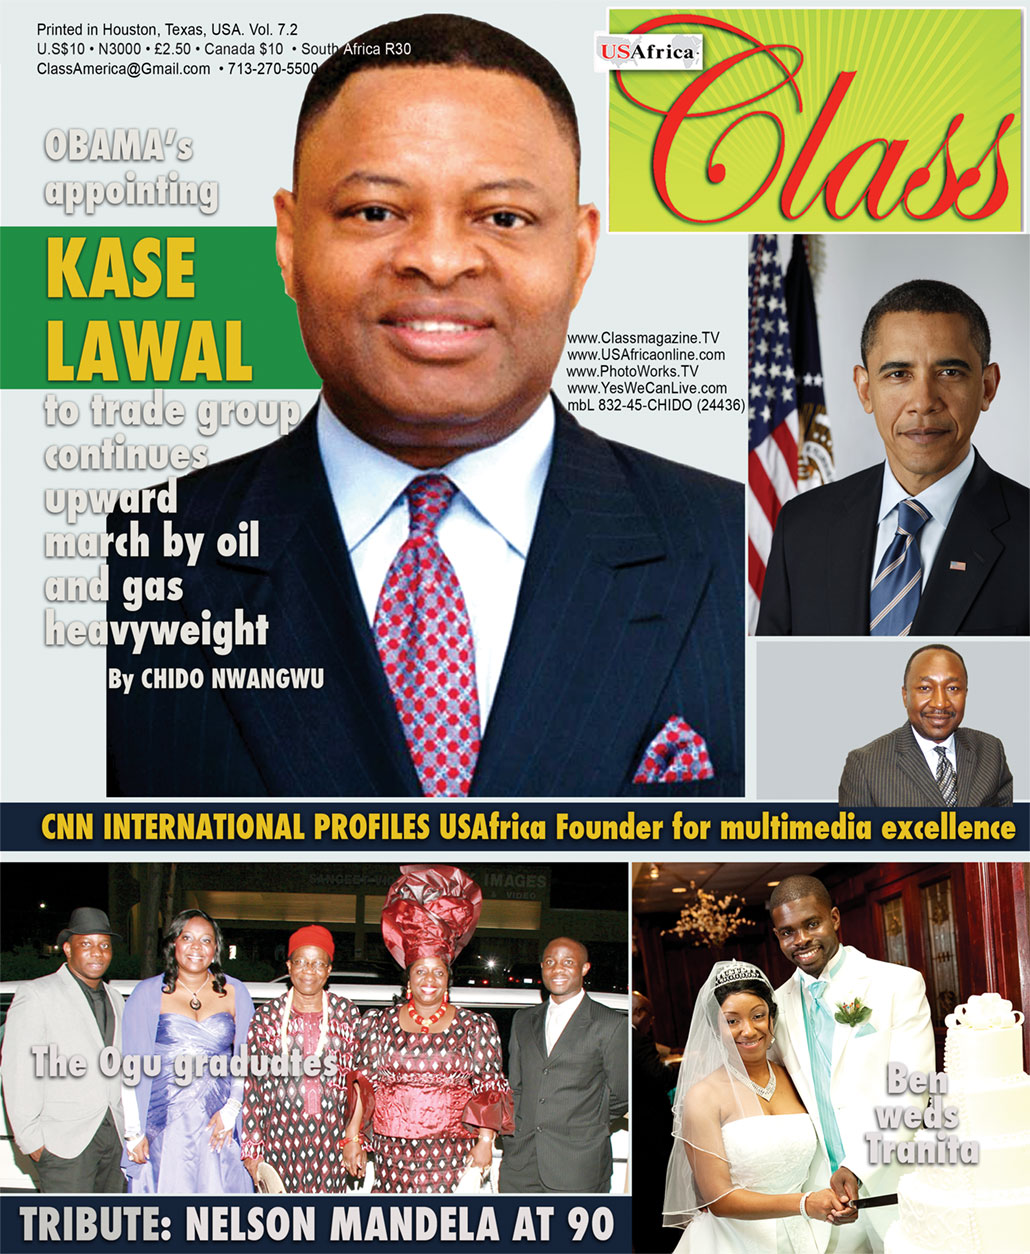 CLASSmagazine 7pt2, Kase Lawal, President Barack Obama, Chido Nwangwu, USAfrica,